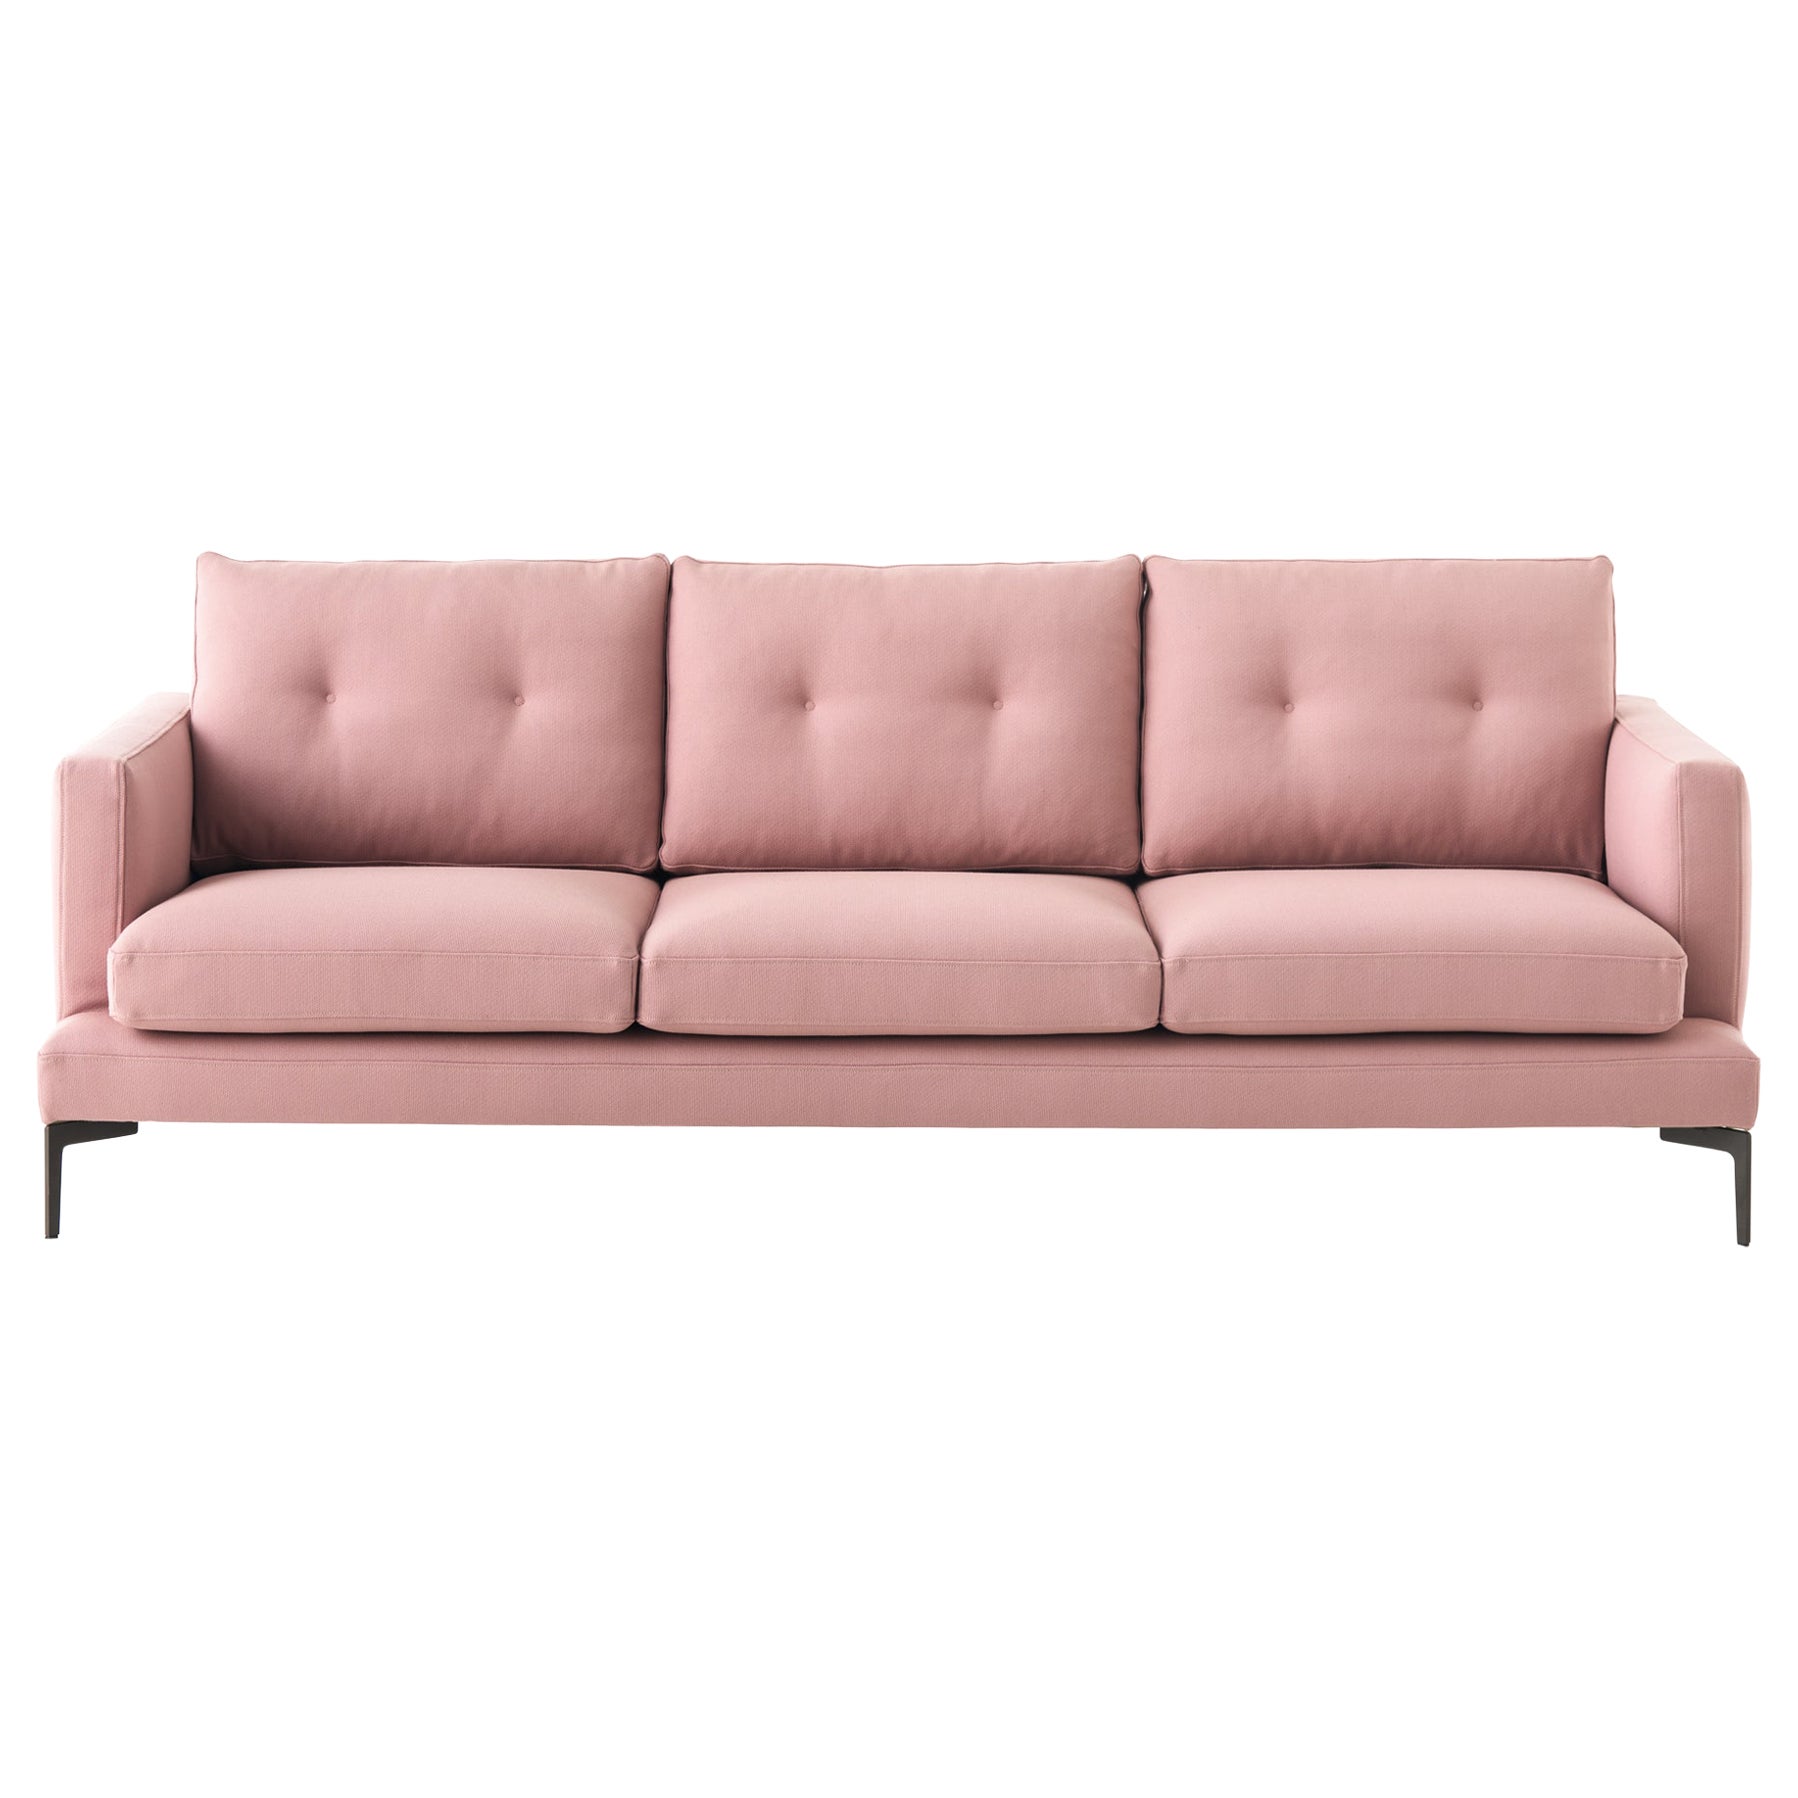 Essentiel 3-Seat 250 Sofa in Braided Pink Upholstery & Grey Legs, Sergio Bicego